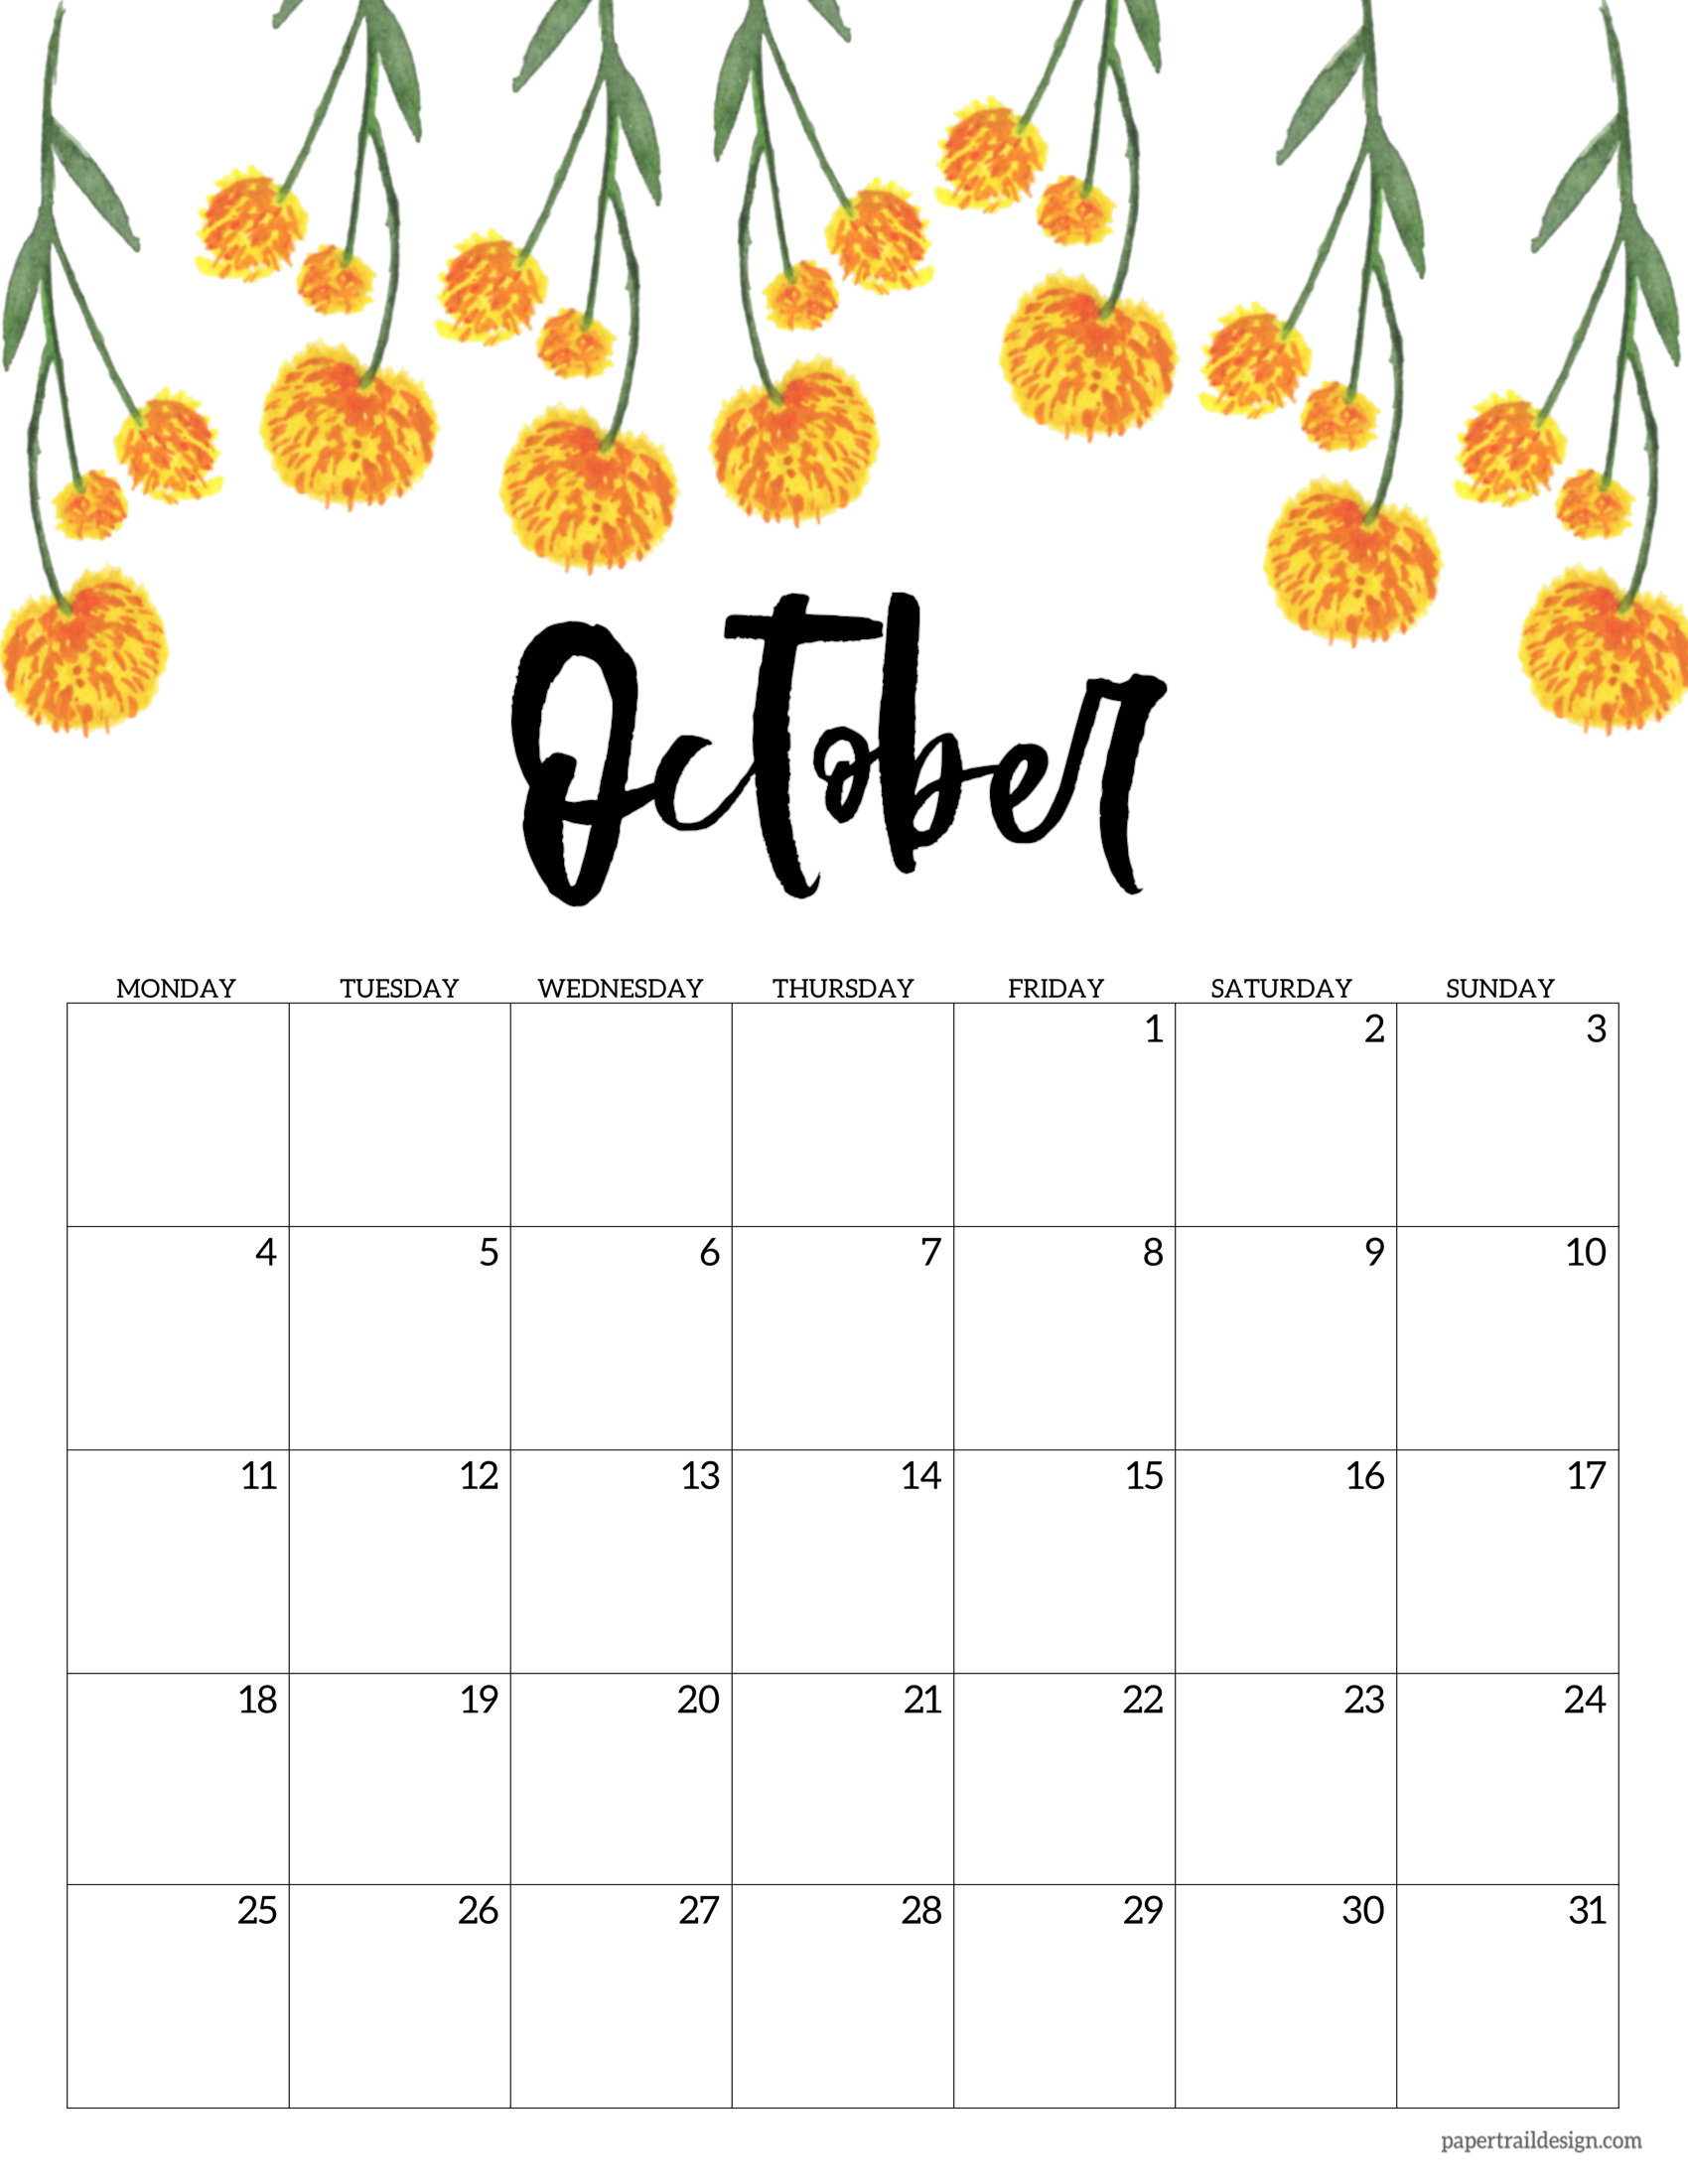 Free Printable 2021 Floral Calendar - Monday Start | Paper